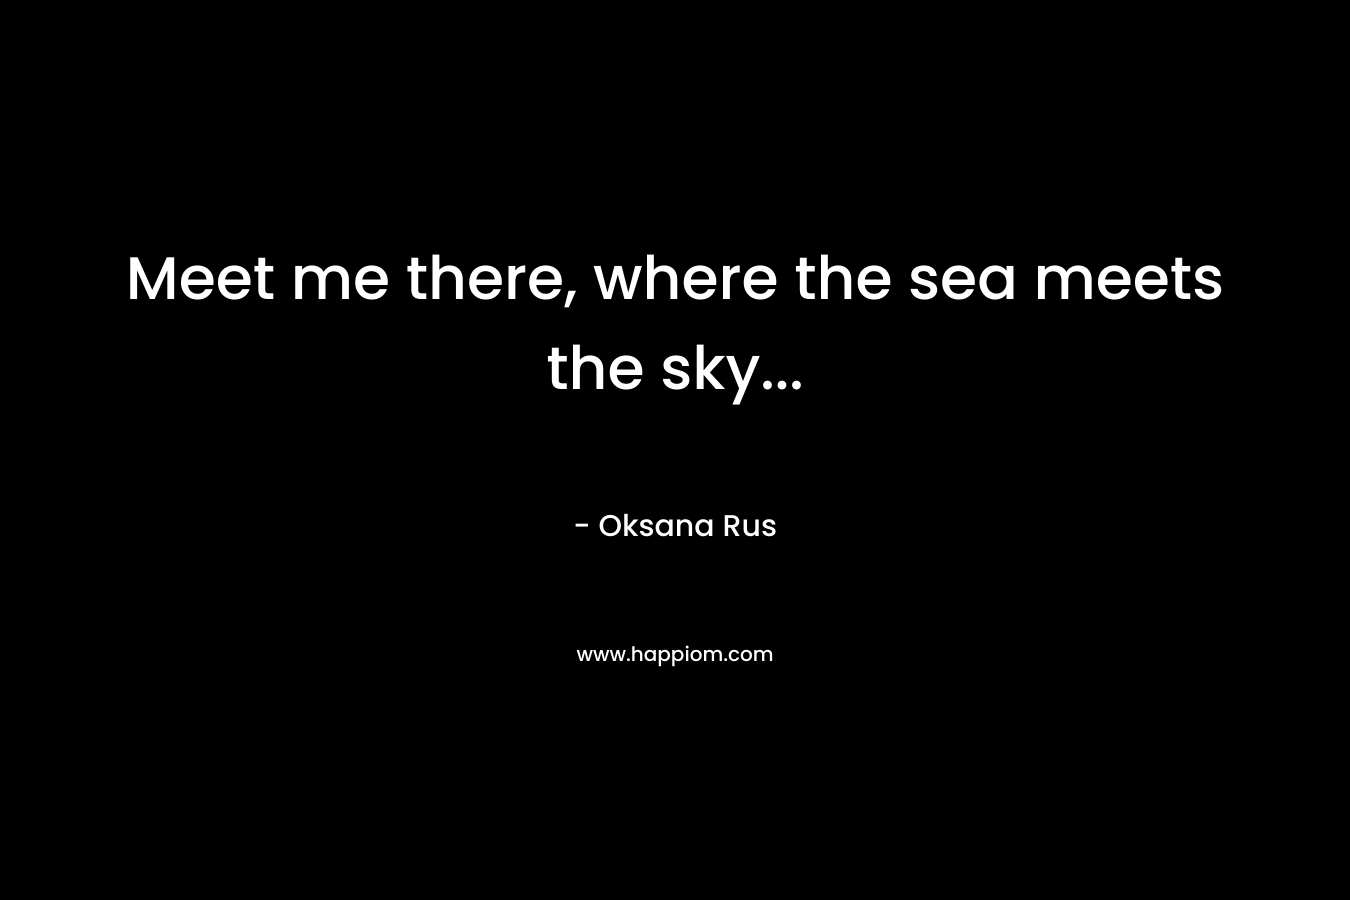 Meet me there, where the sea meets the sky...